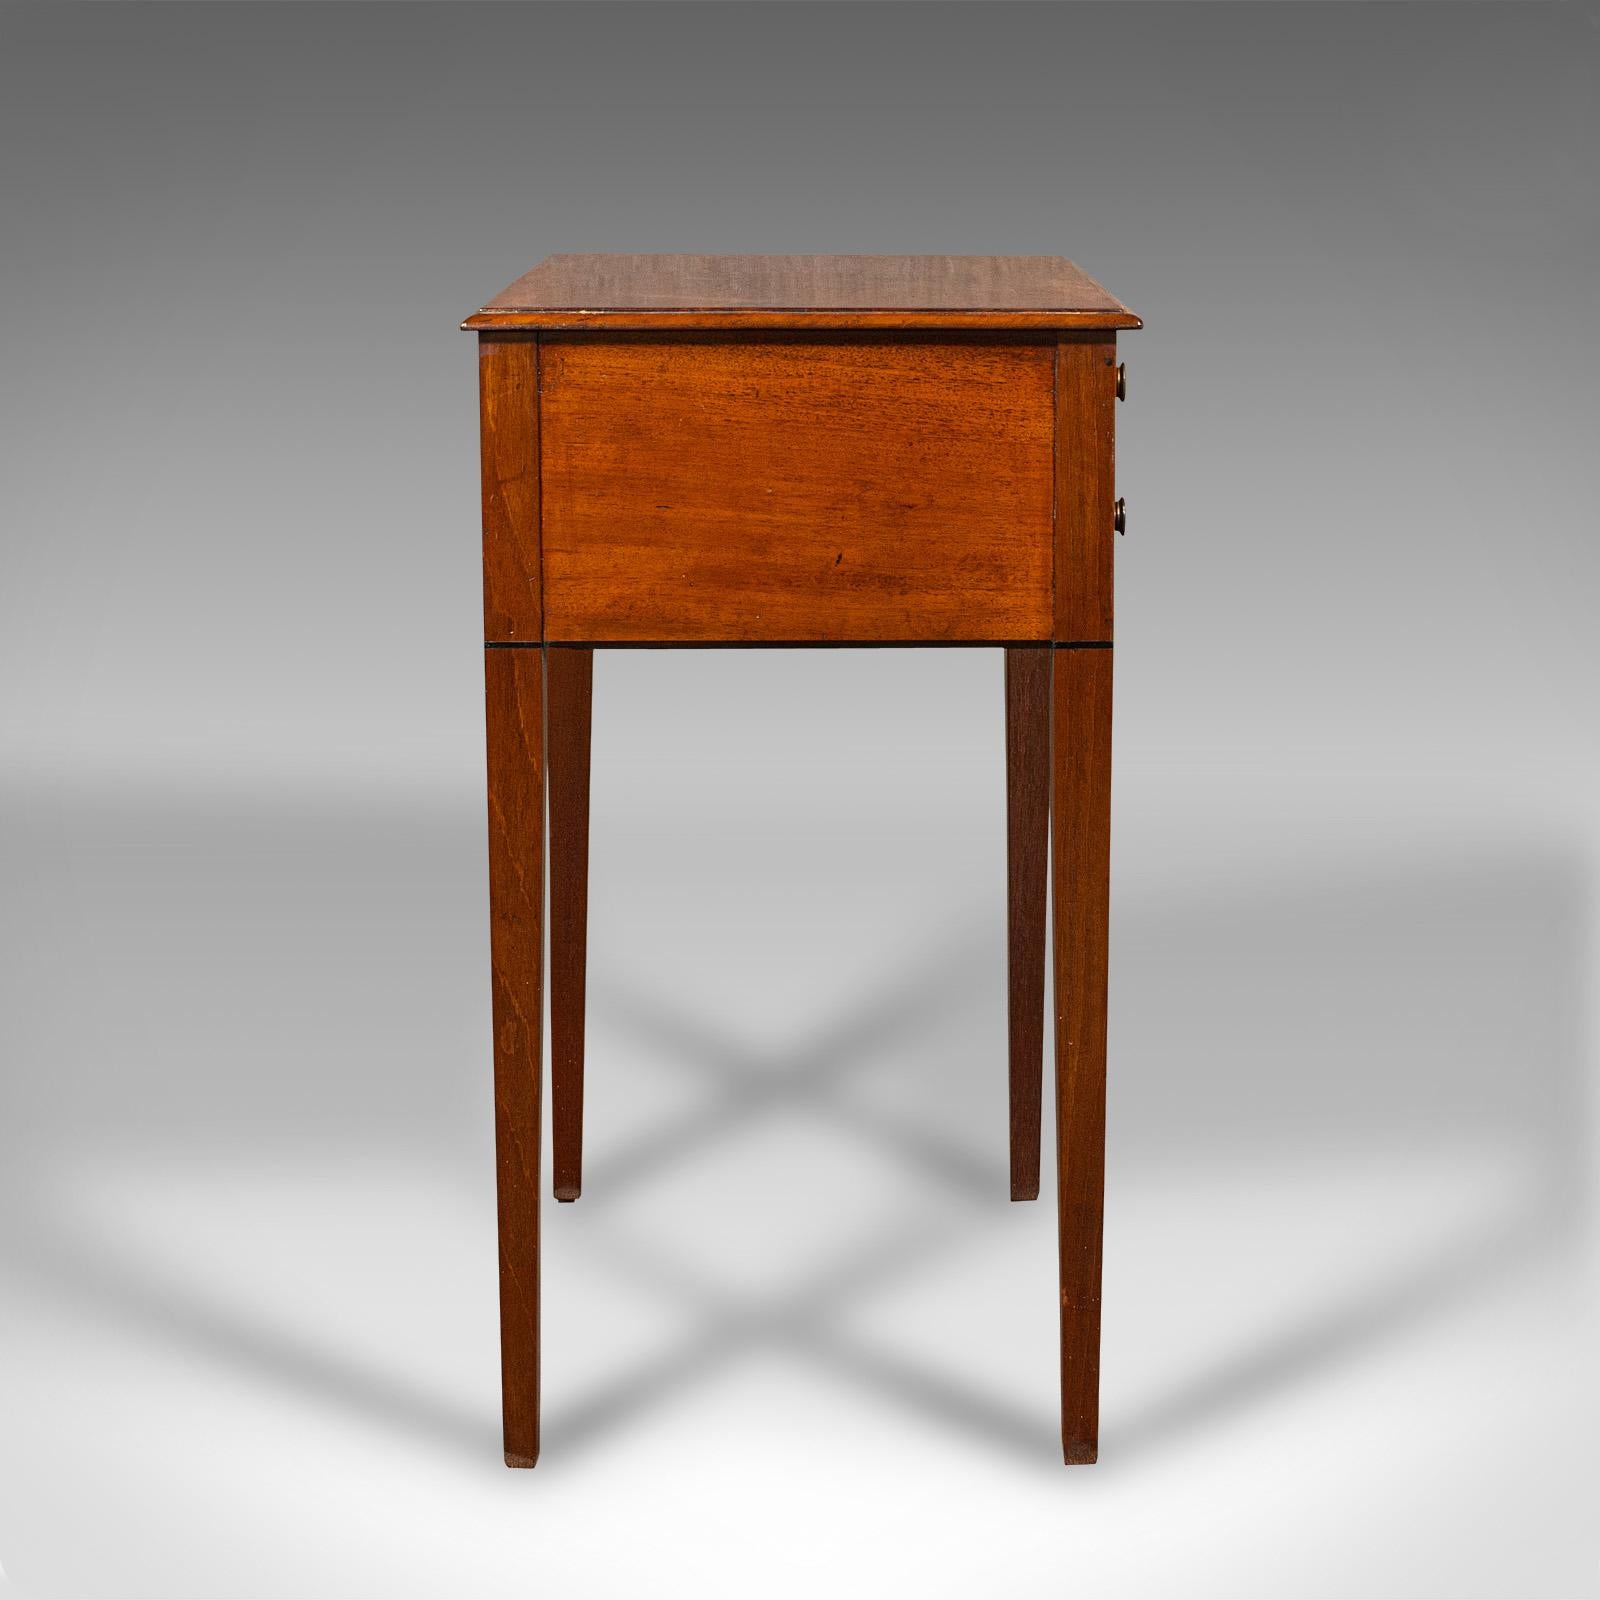 British Small Antique Sewing Table, English, Bureau, Correspondence Desk, Georgian, 1800